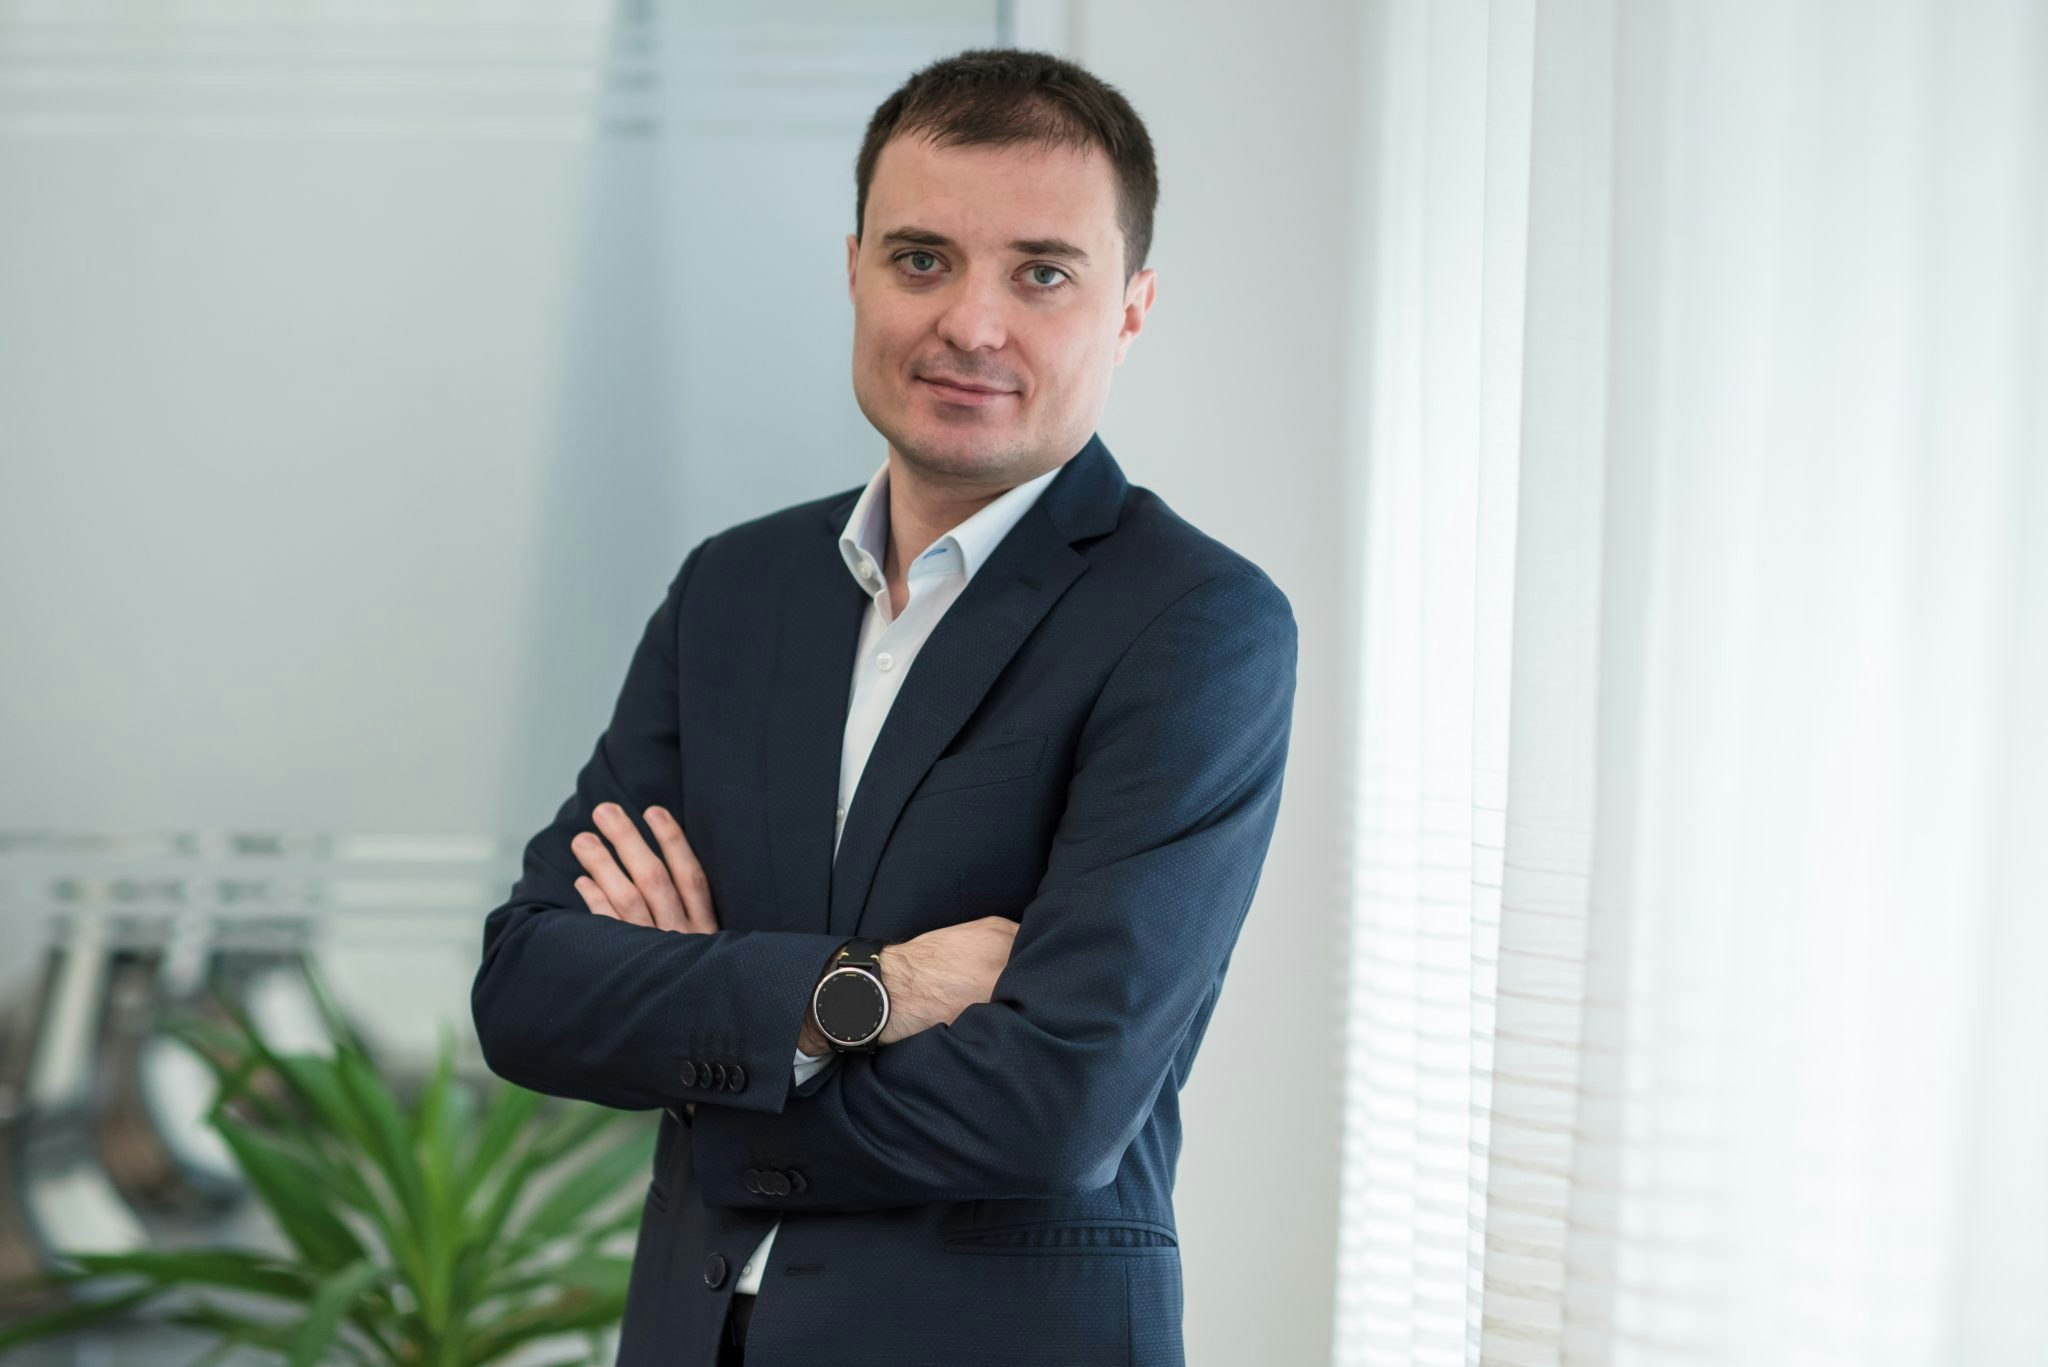 Nemanja Mikac, ElevenEs’ chief executive